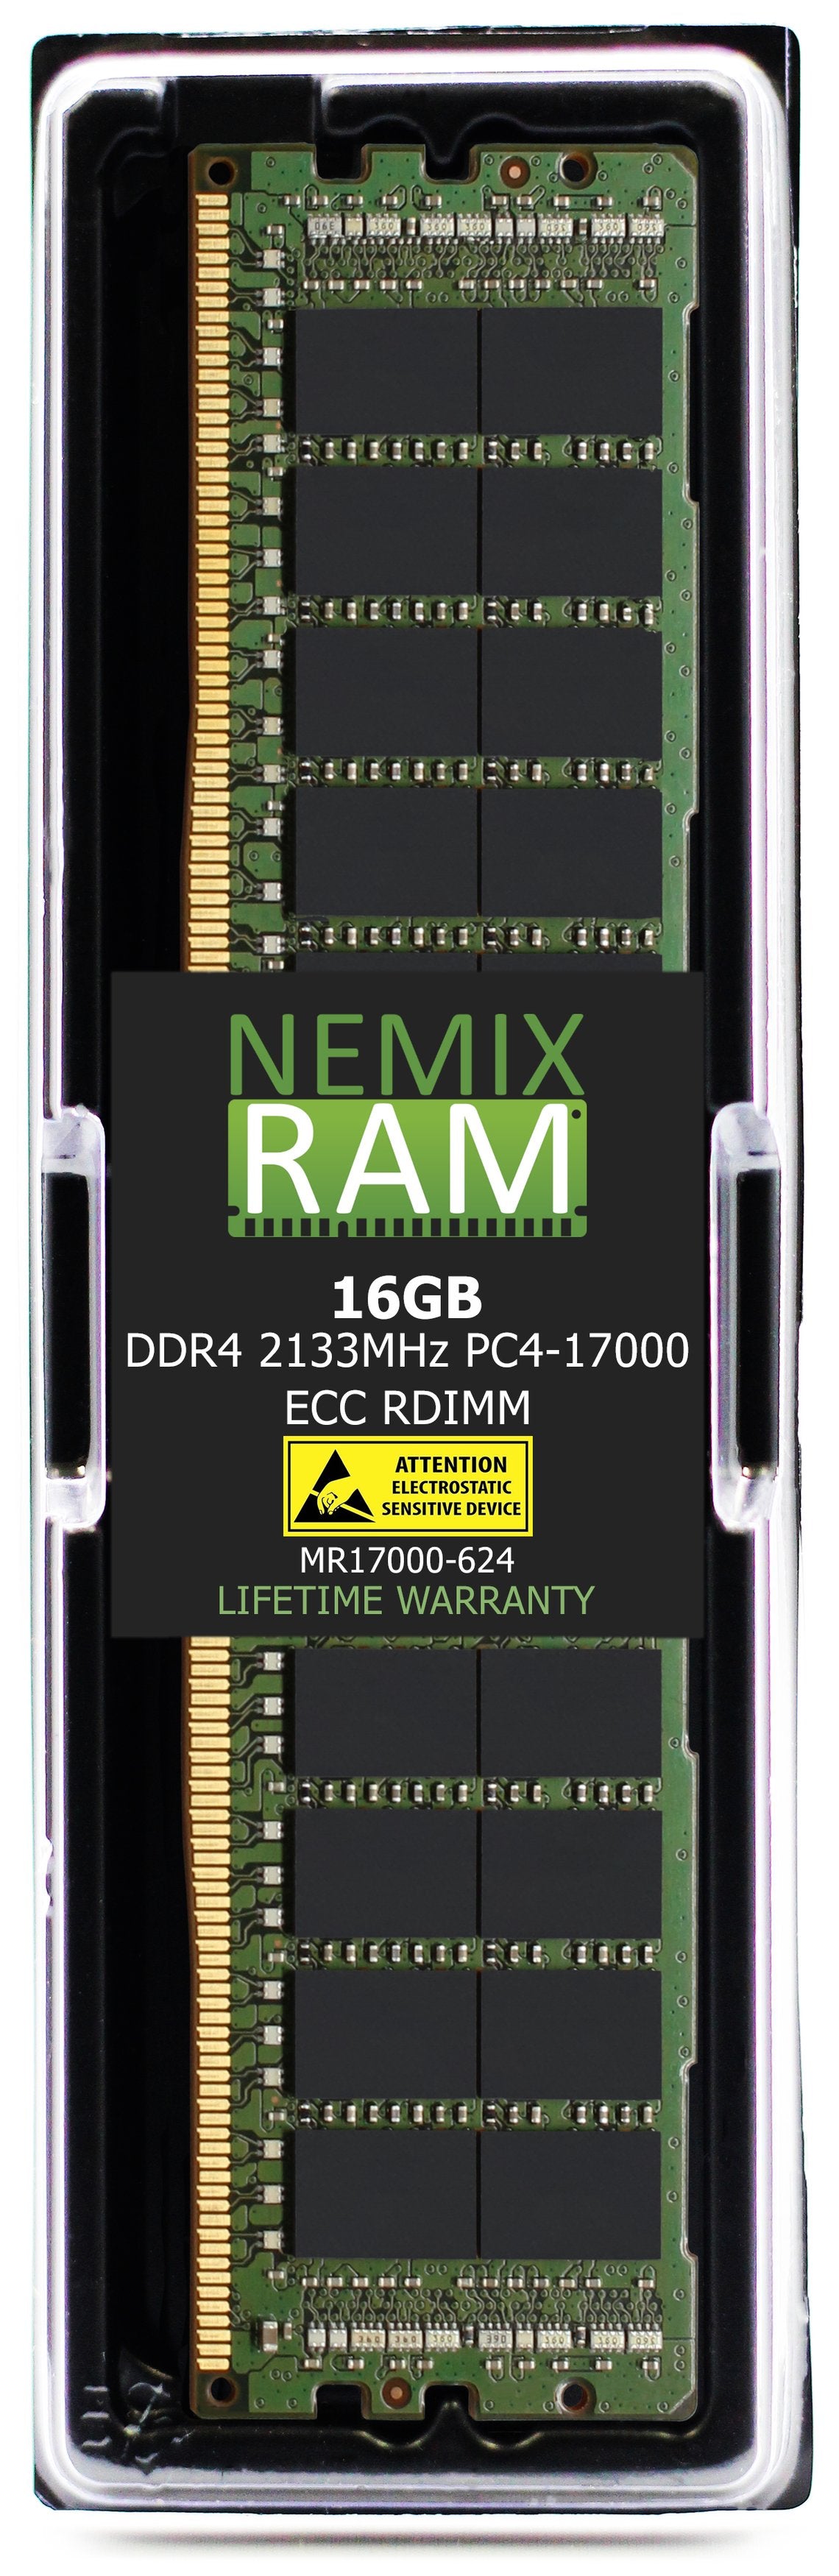 NEC Express5800 T120f Memory Module N8102-646F 16GB DDR4 2133MHZ PC4-17000 RDIMM